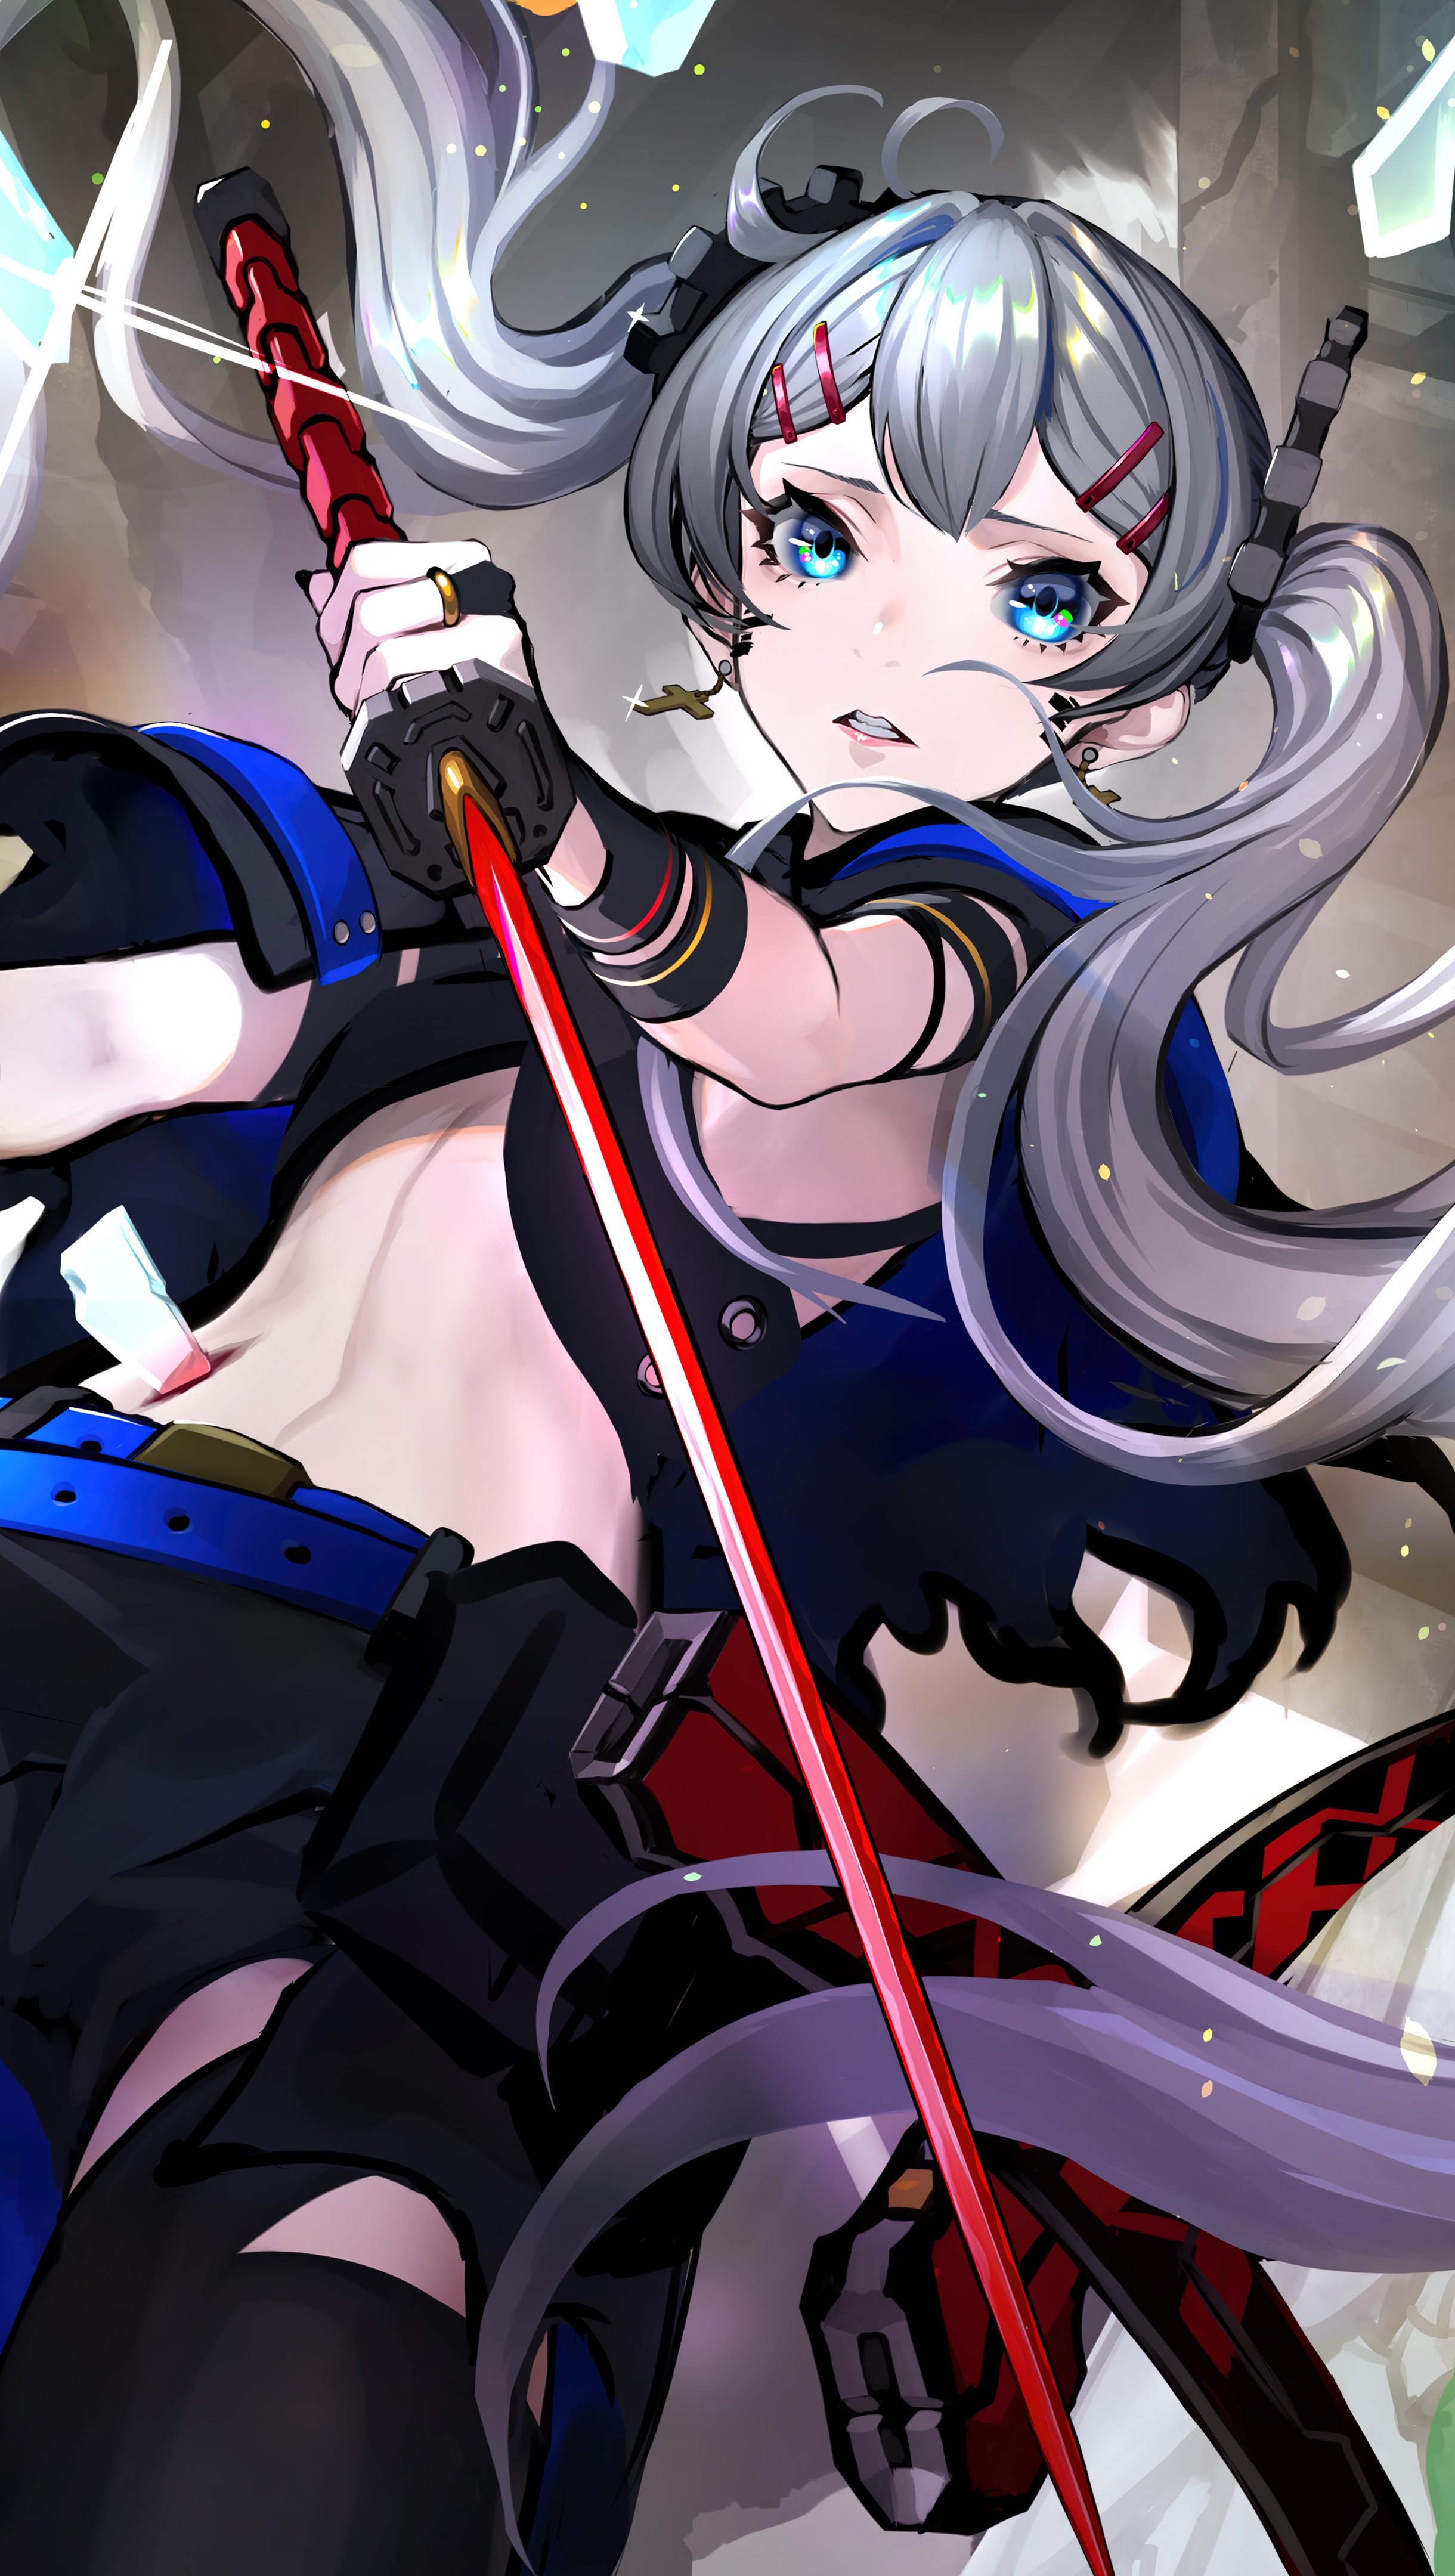 Anime girl with sword render by Muztnafi on DeviantArt